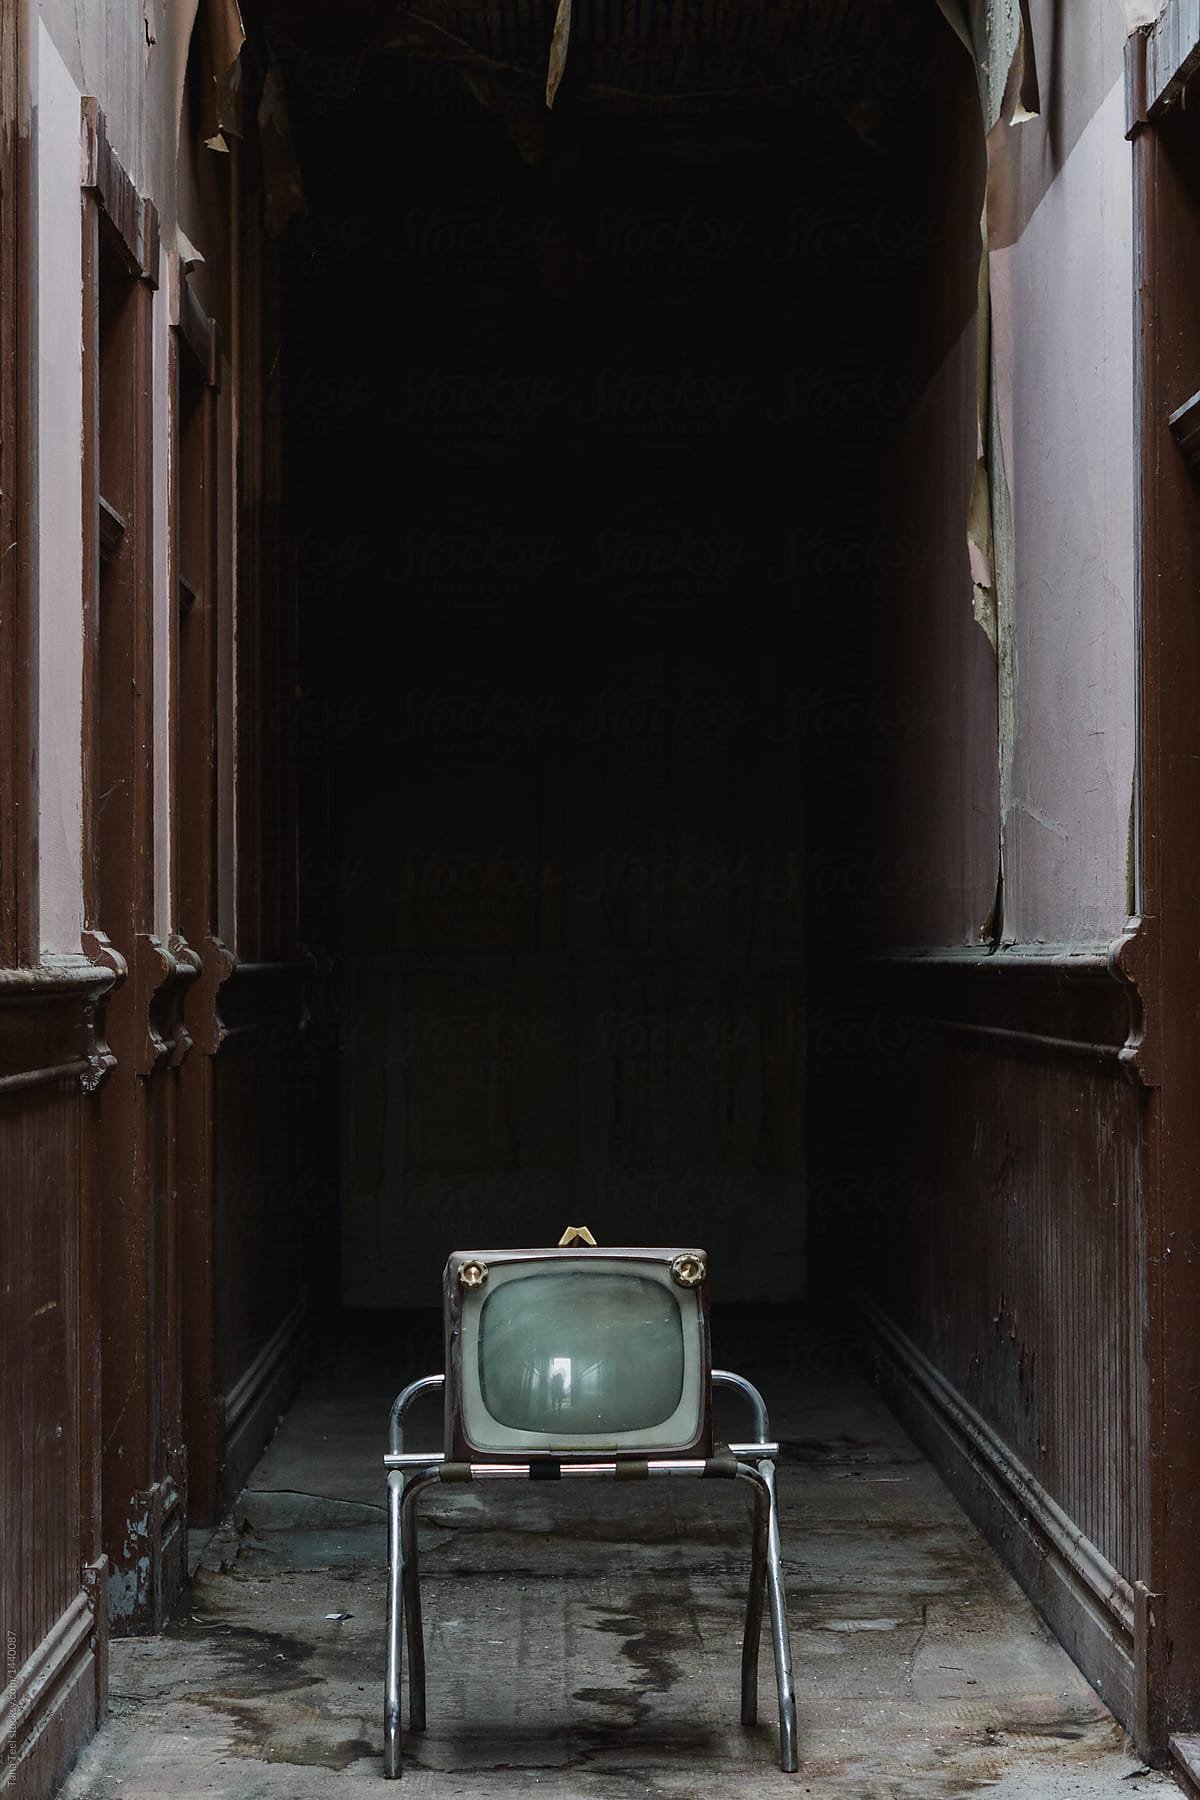 vintage tv abandoned in hallway of old building